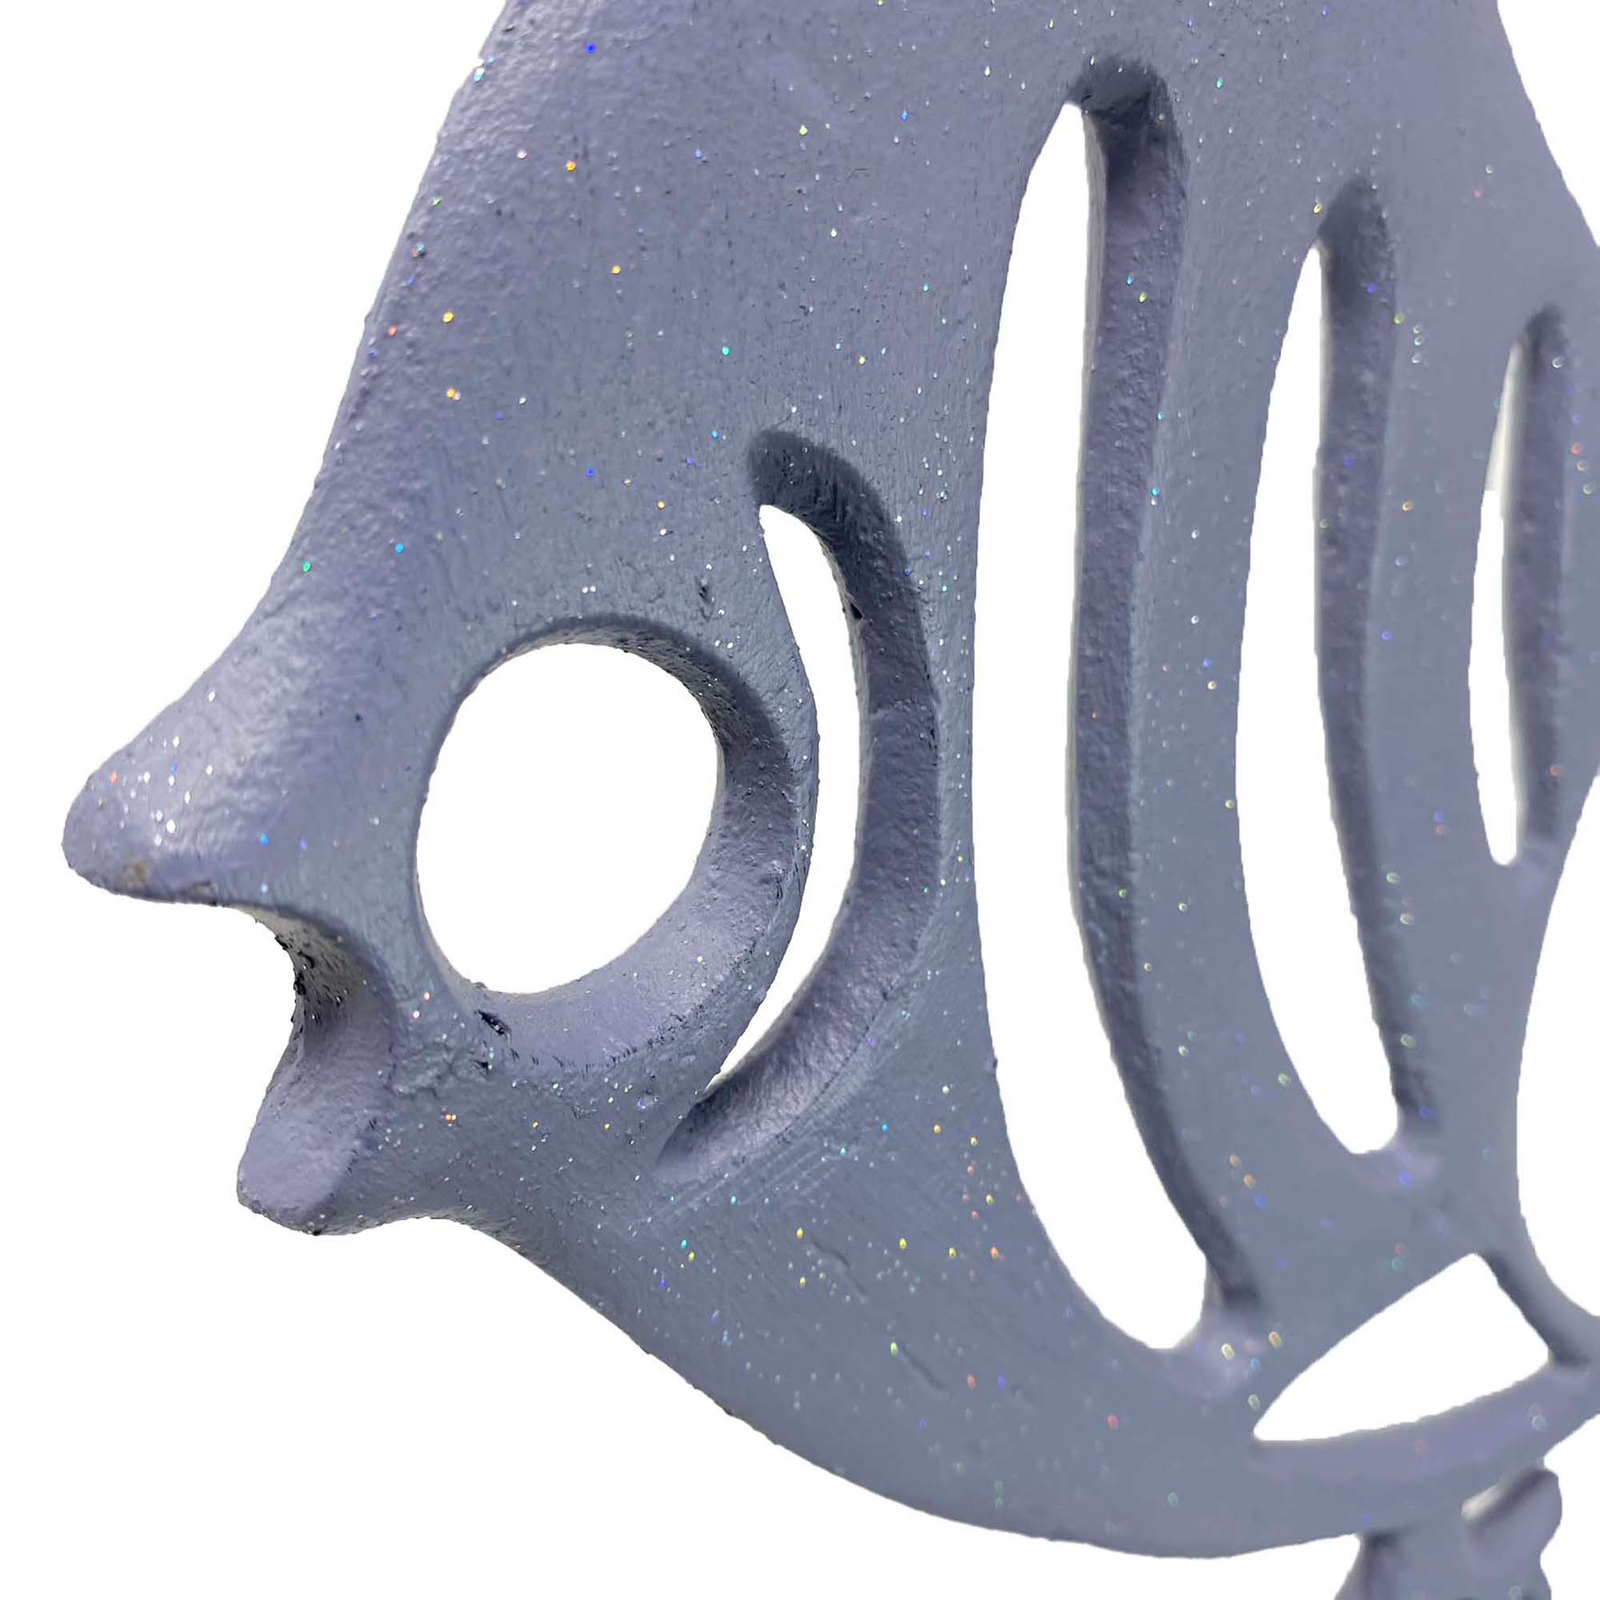 Elur Angel Fish Iron Ornament 37Cm Grey Shimmer Statue Statues Elur   